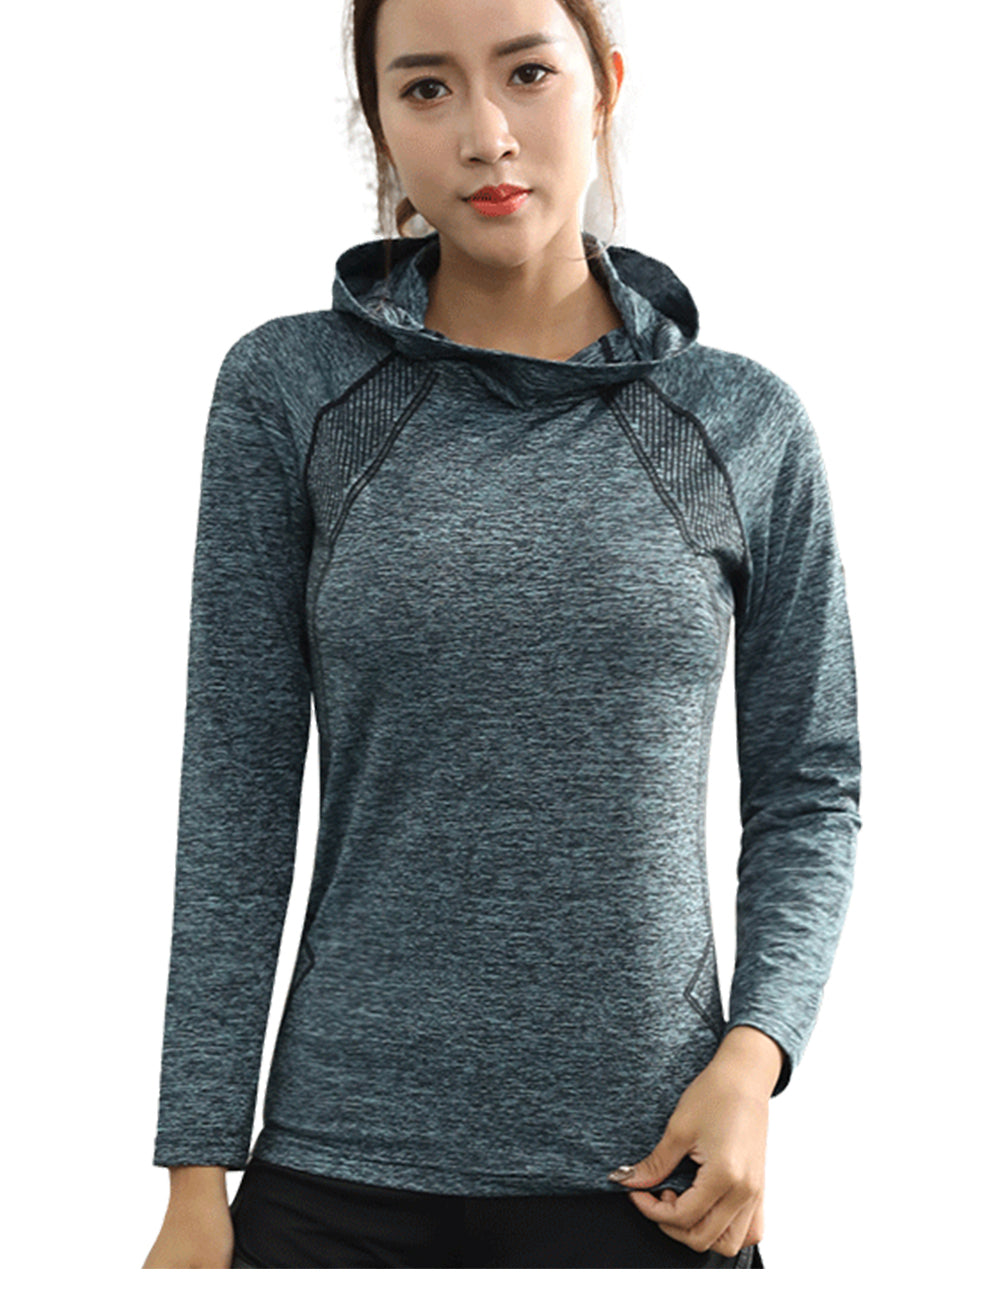 Women's Running shirt Quick Dry Yoga Fitness long Sleeve Hooded LANBAOSI